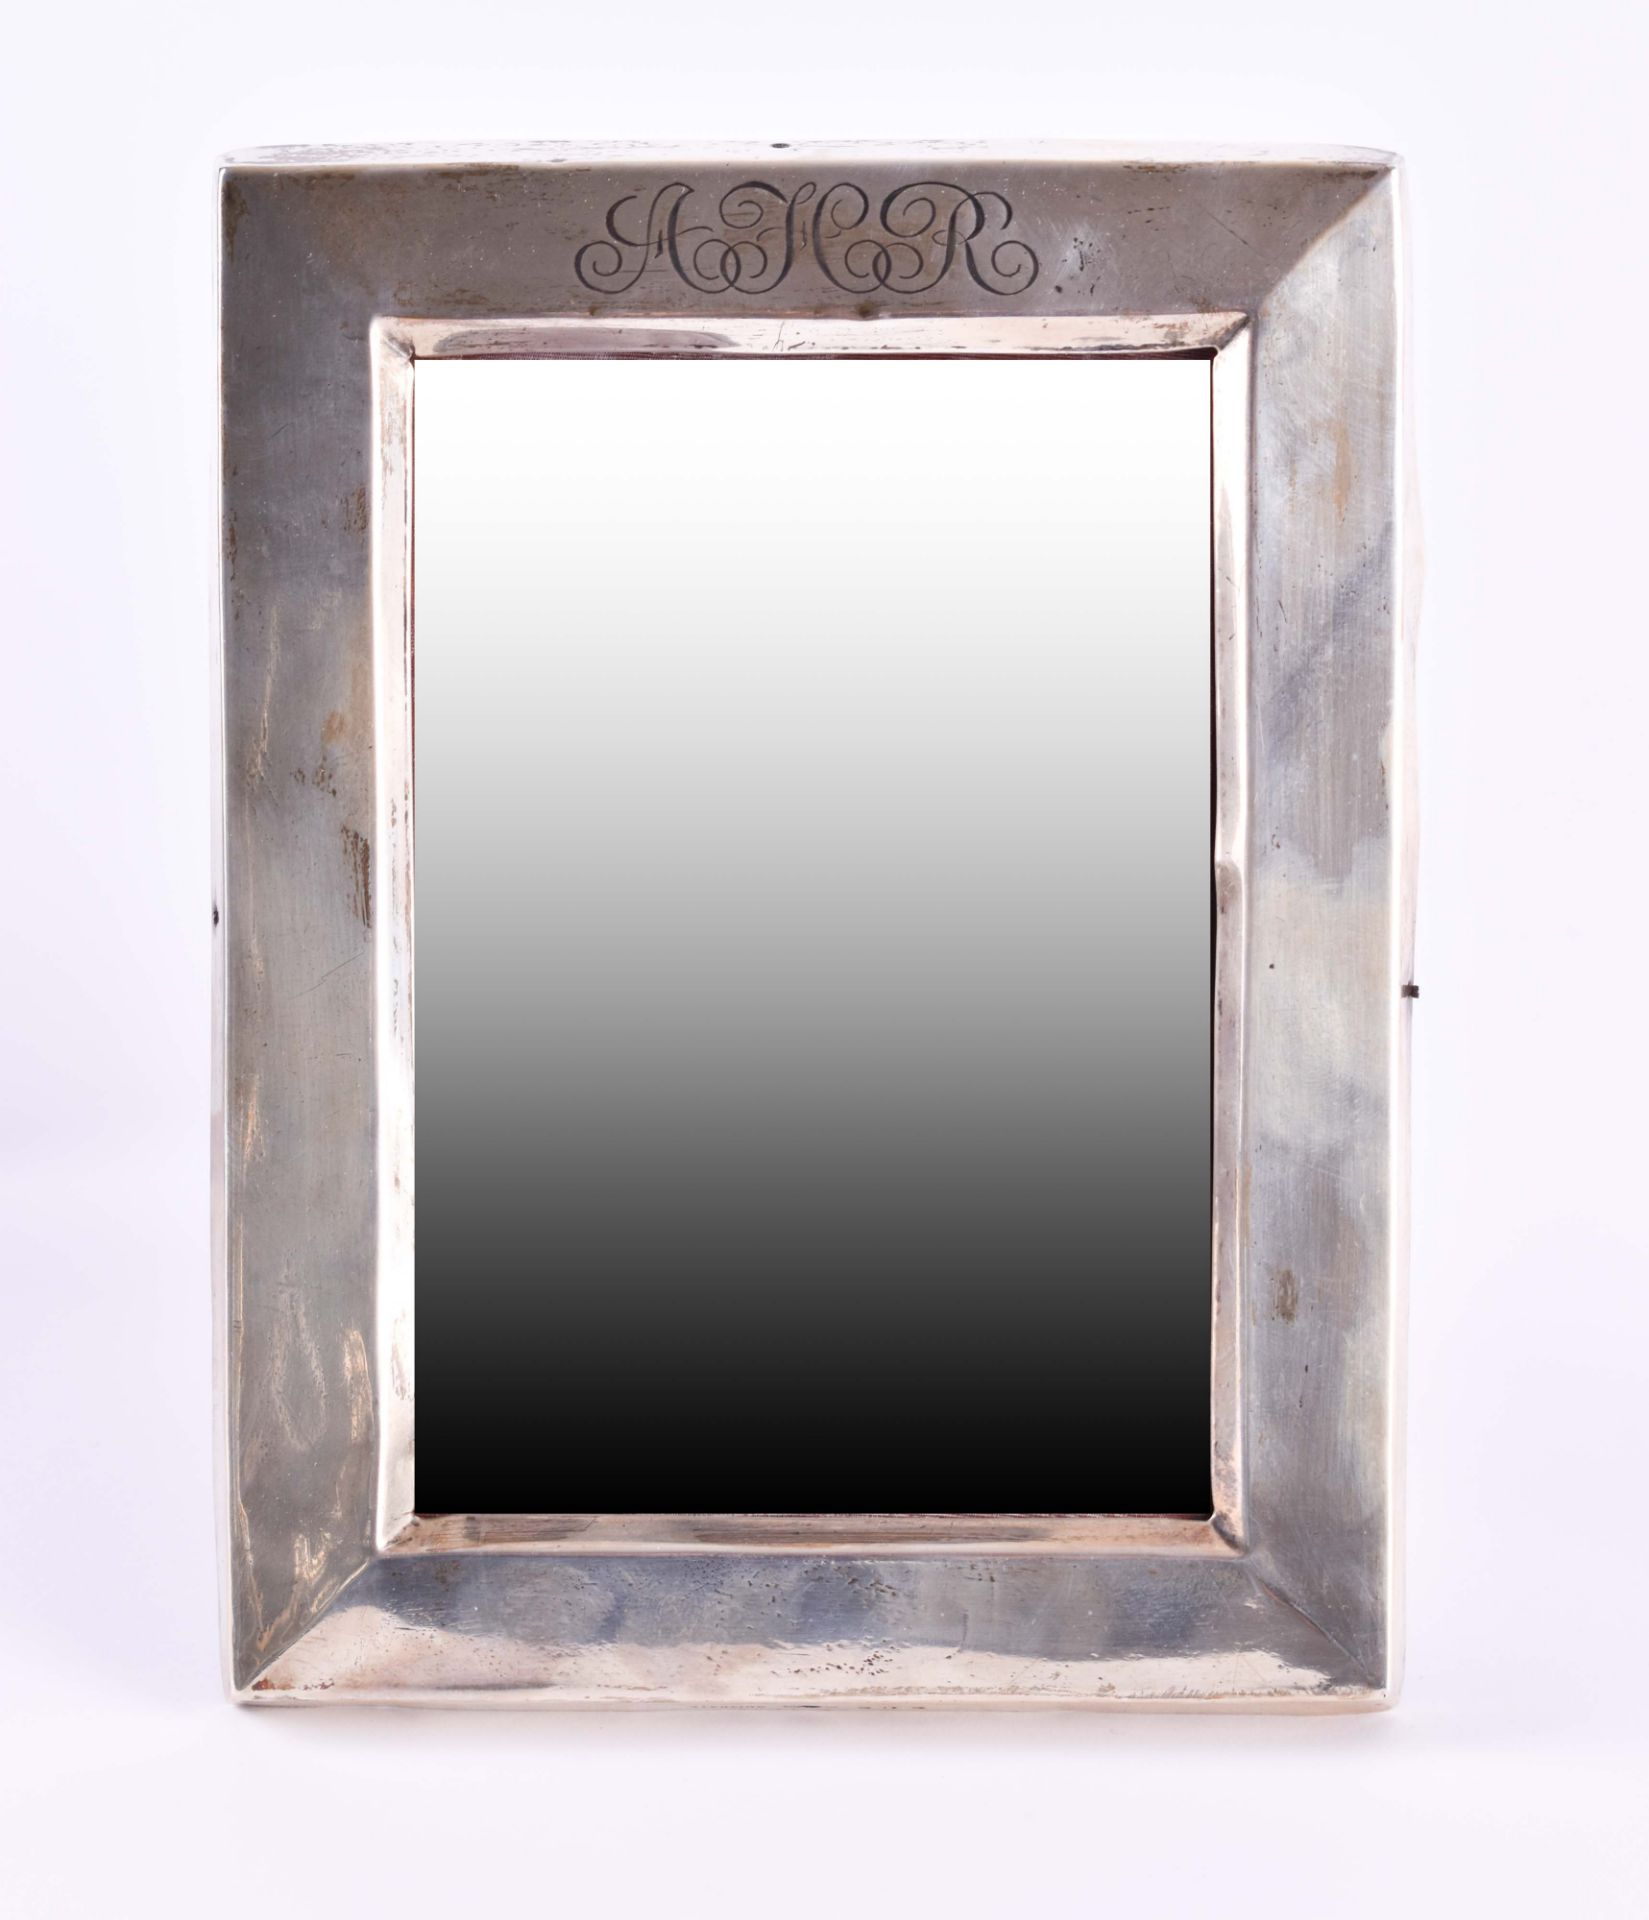 Picture framesterling silver 925/000, 18 cm x 14 cmStandbilderrahmenSterling Silber 925/000, 18 cm x